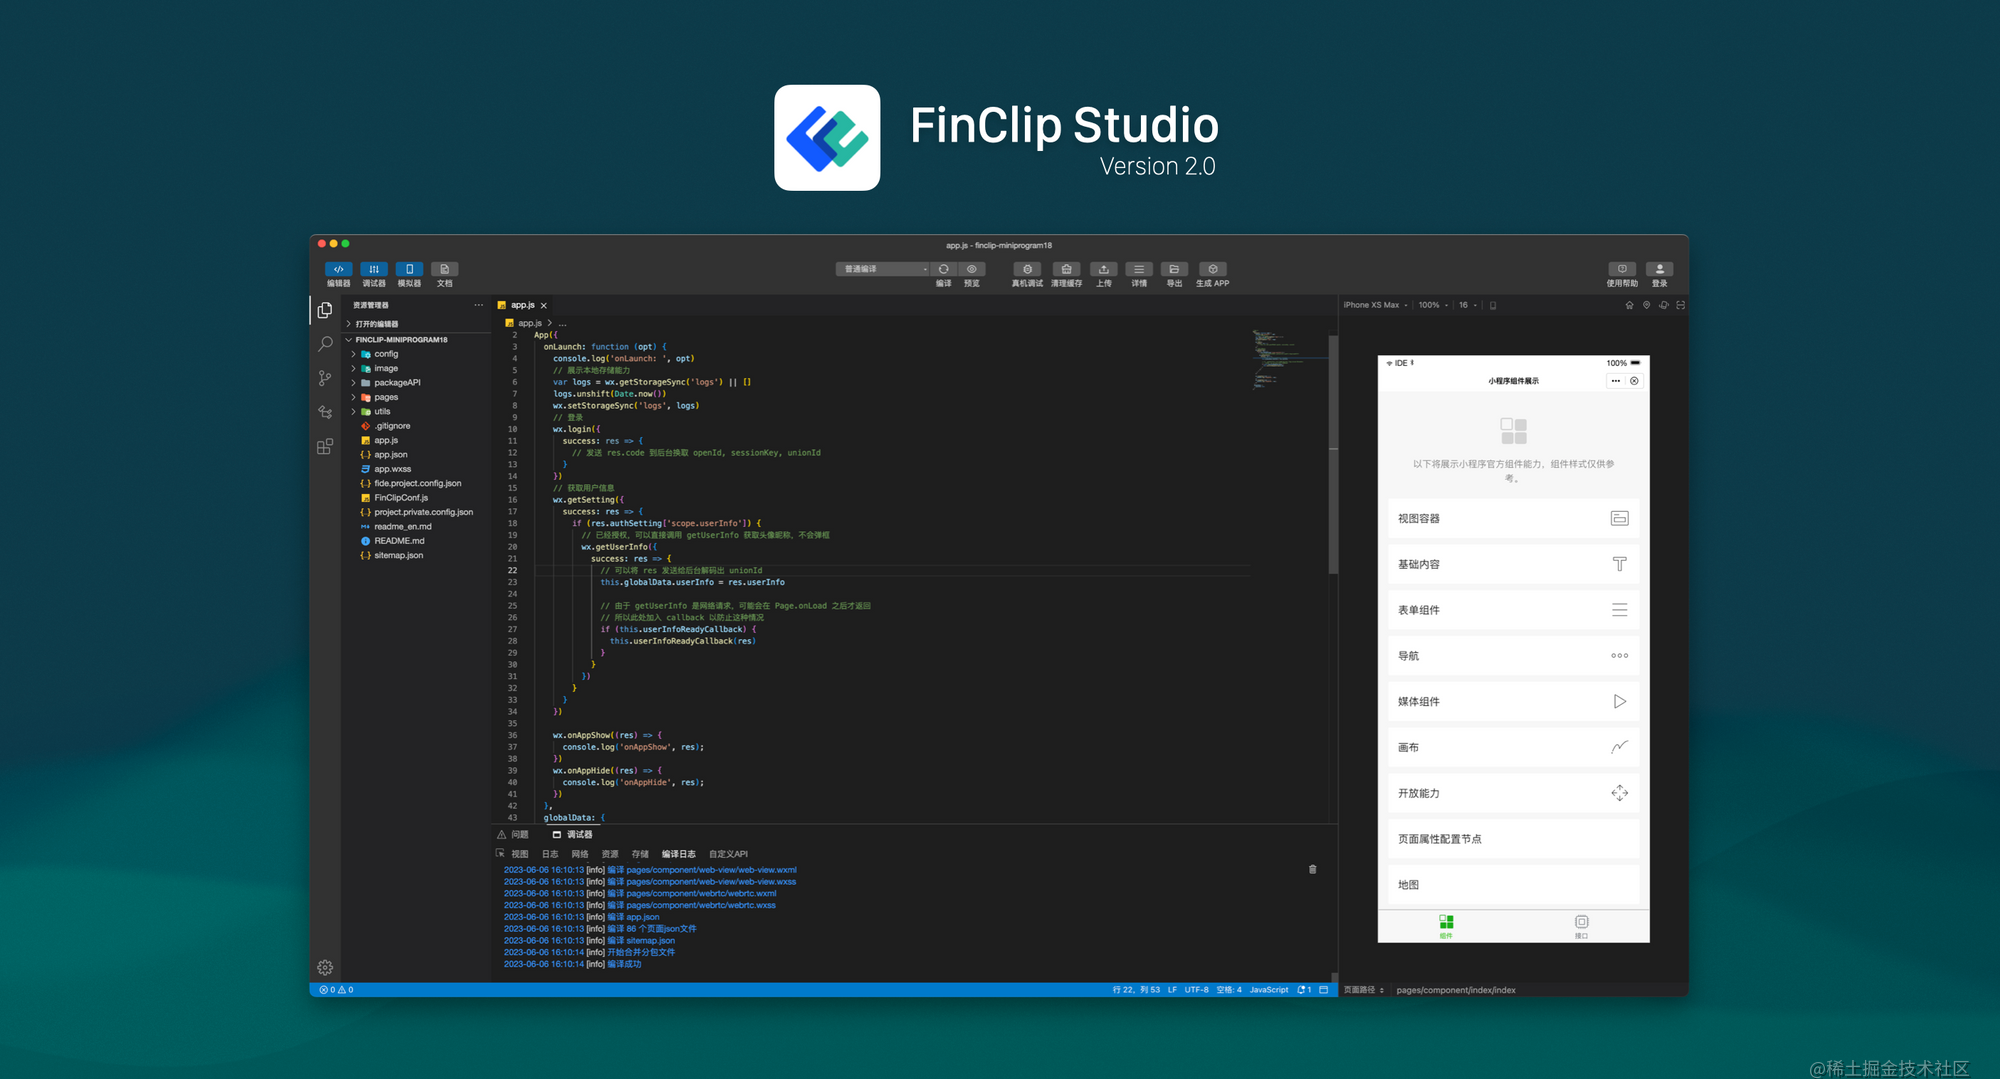 【产品工具】FinClip Studio 现已全线升级